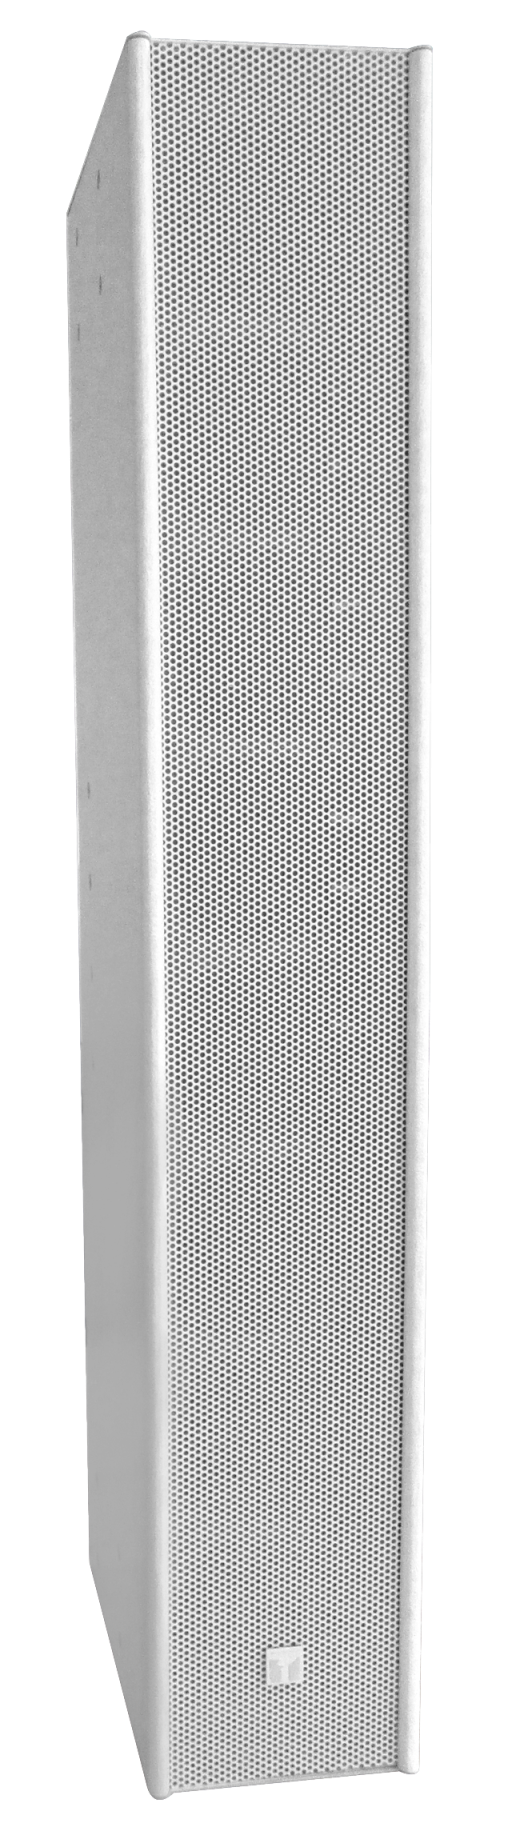 ZS-S240CW-AS Slim Array Speaker